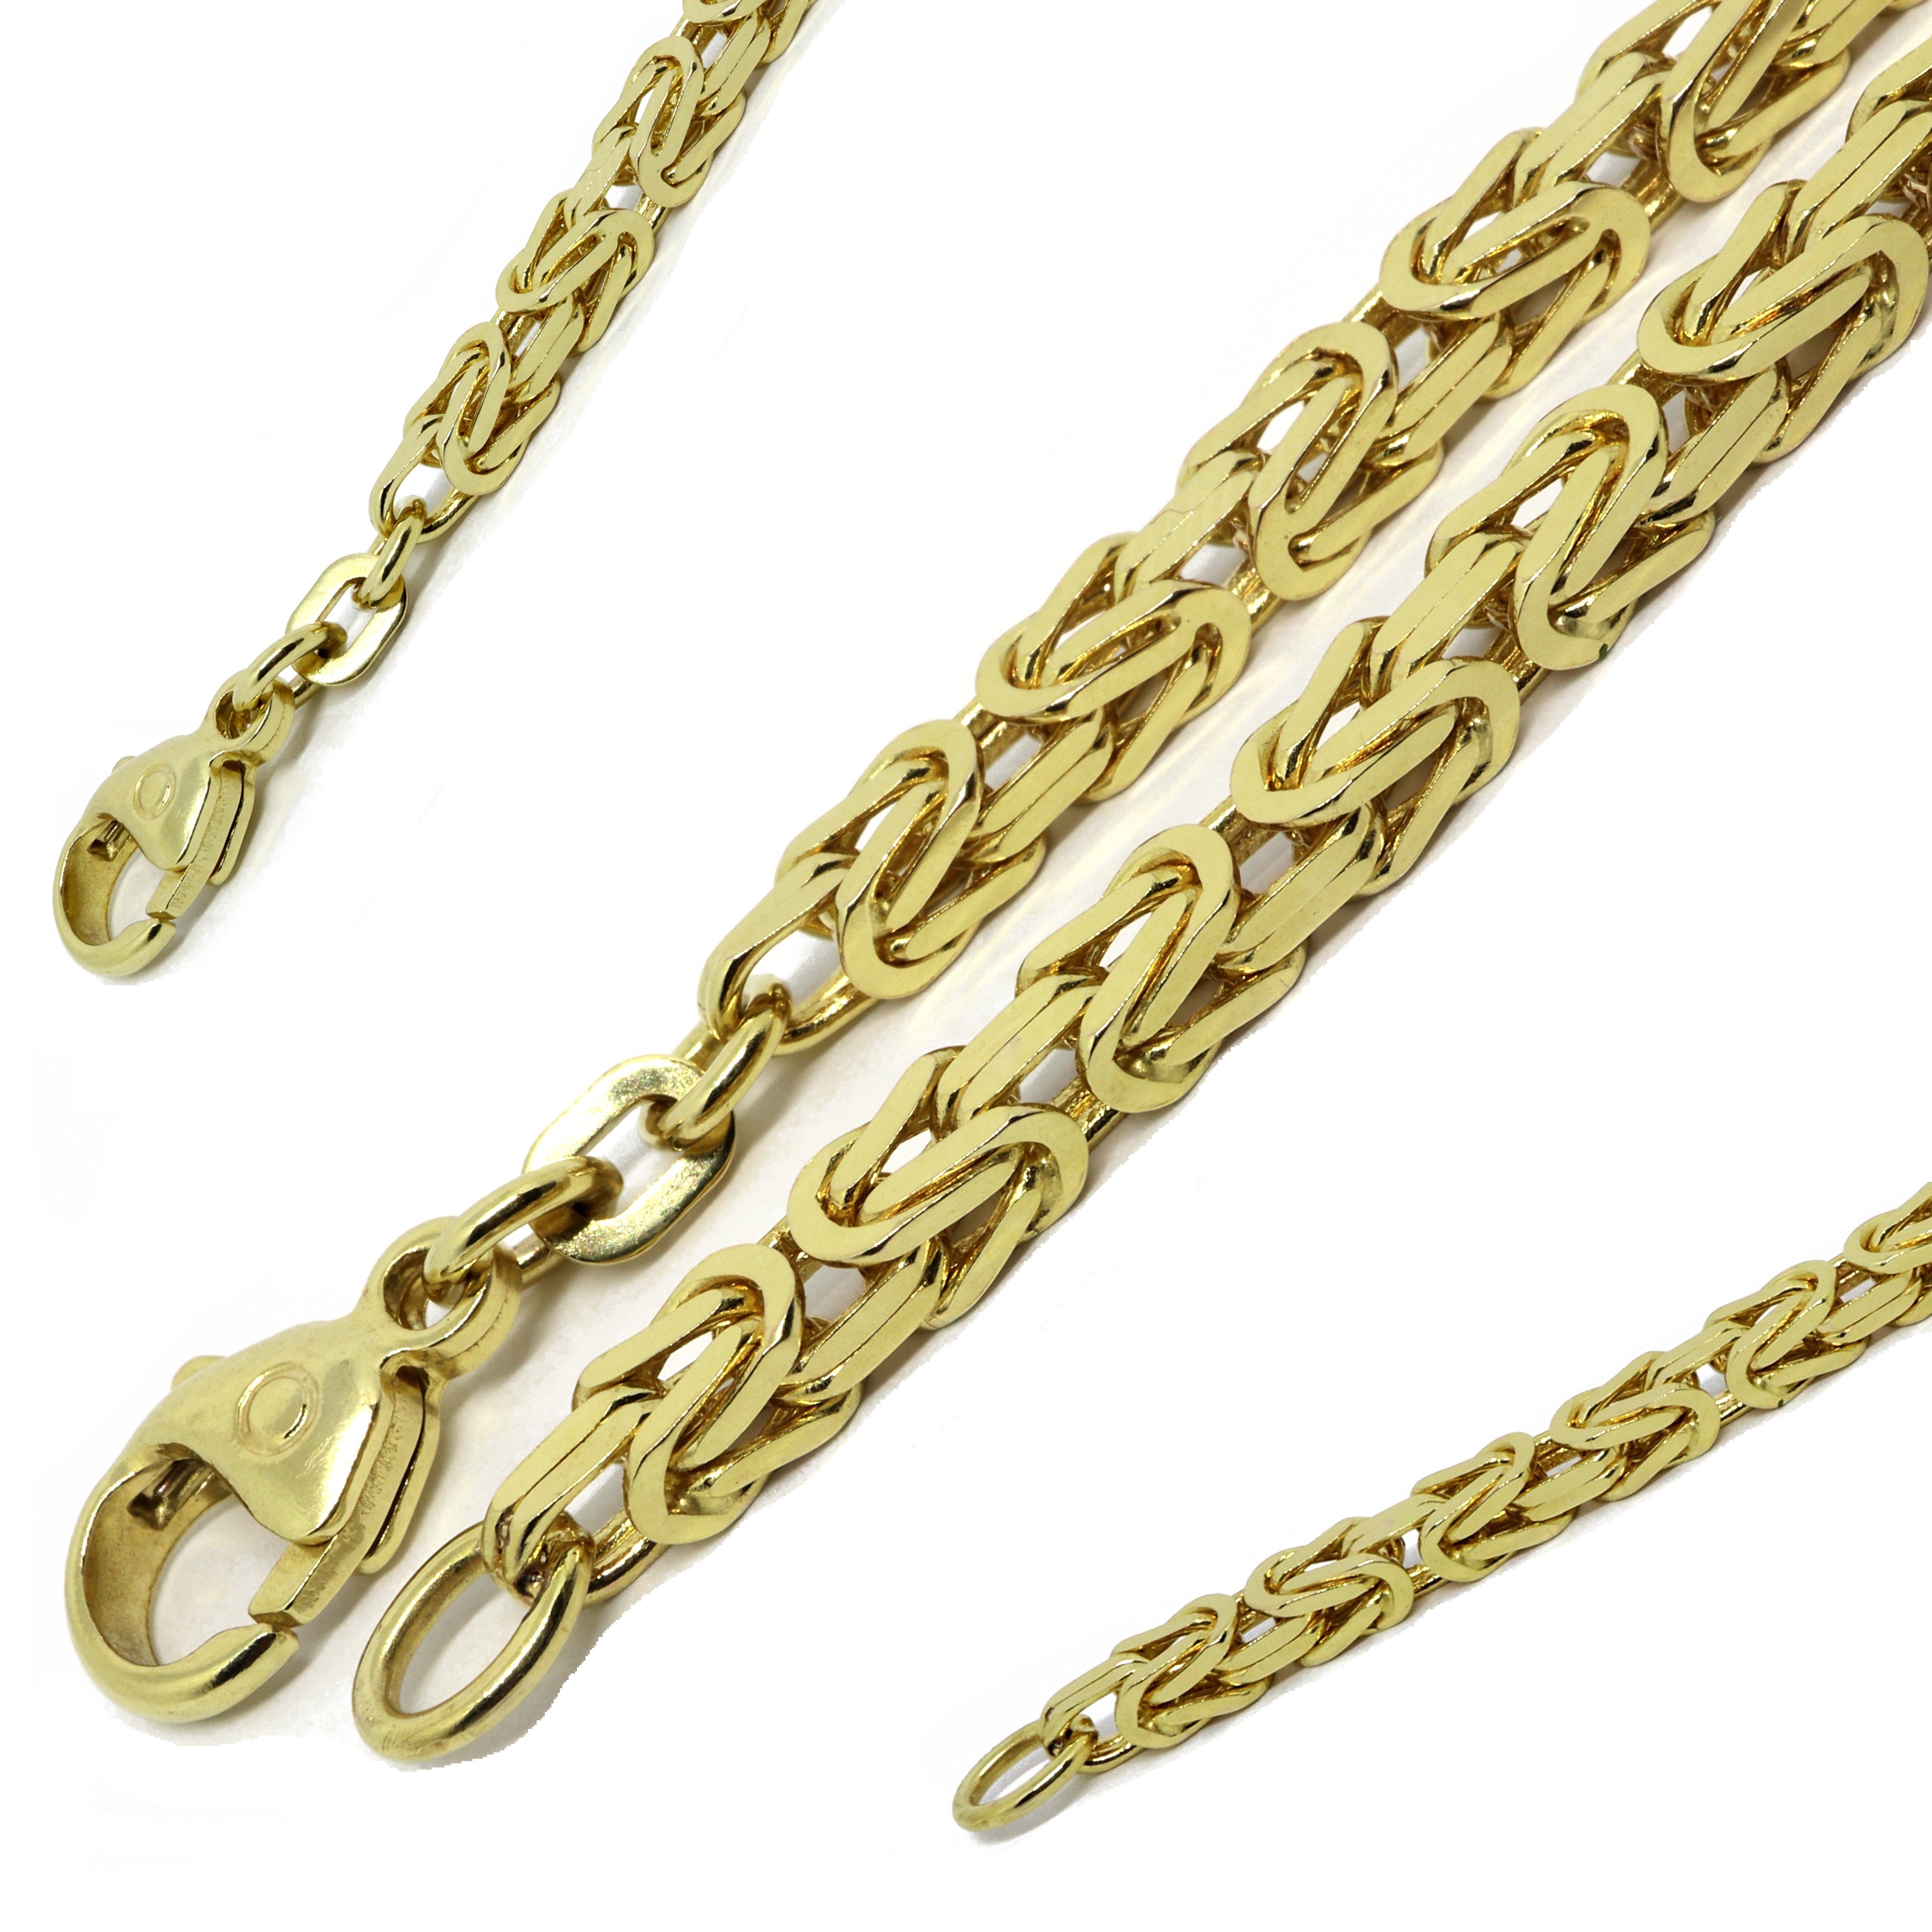 G & J Collier Königskette 585/14K Gold 3,2mm 50 - 65cm hochwertige Halskette, Made in Germany